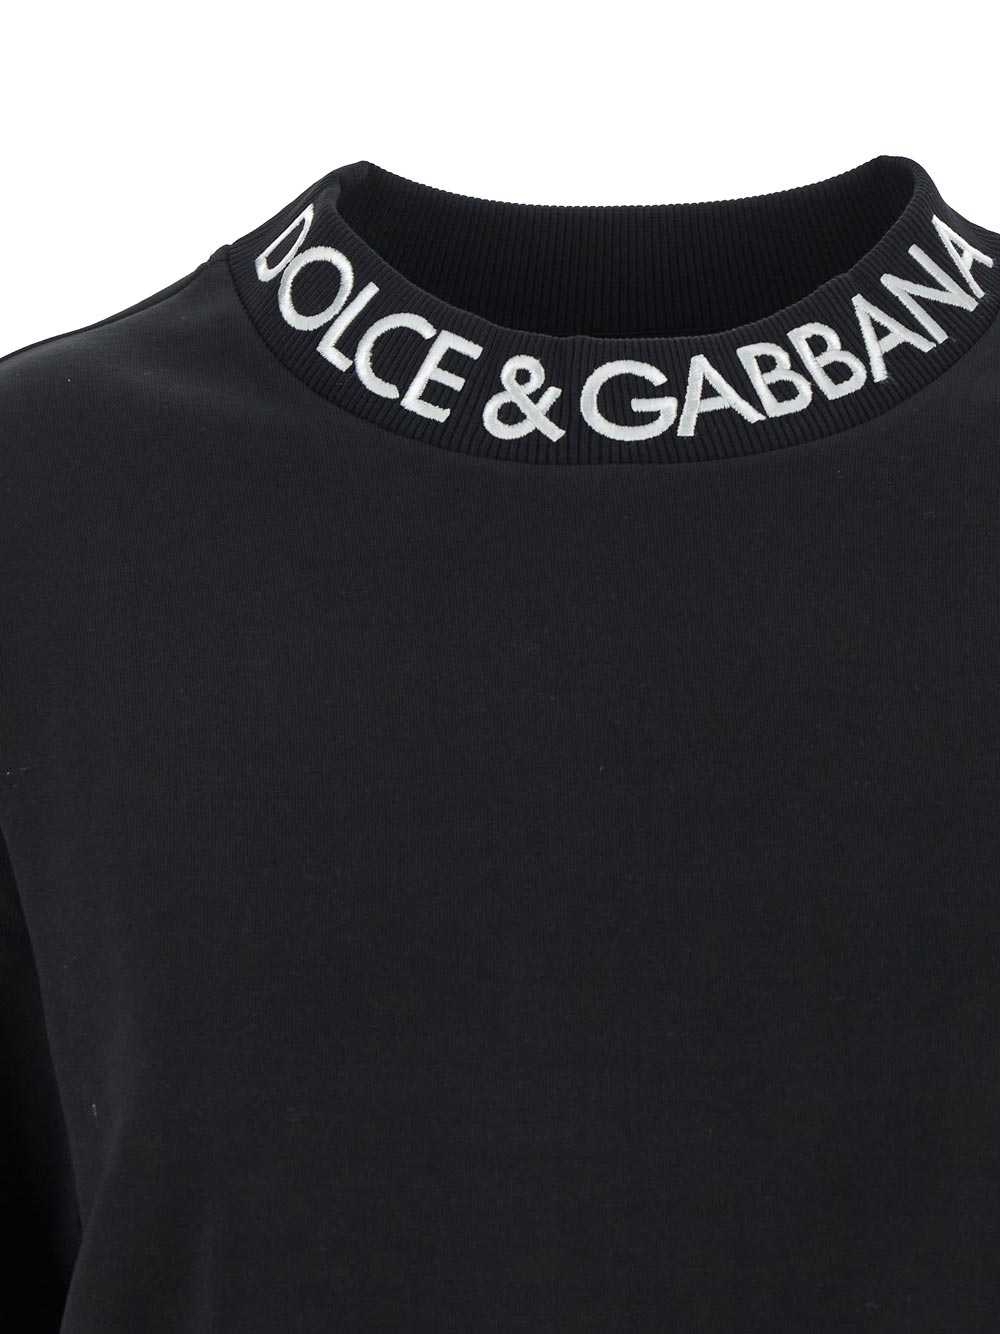 Dolce & Gabbana Jersey Sweatshirt With Dolce&Gabbana Logo Embroidery